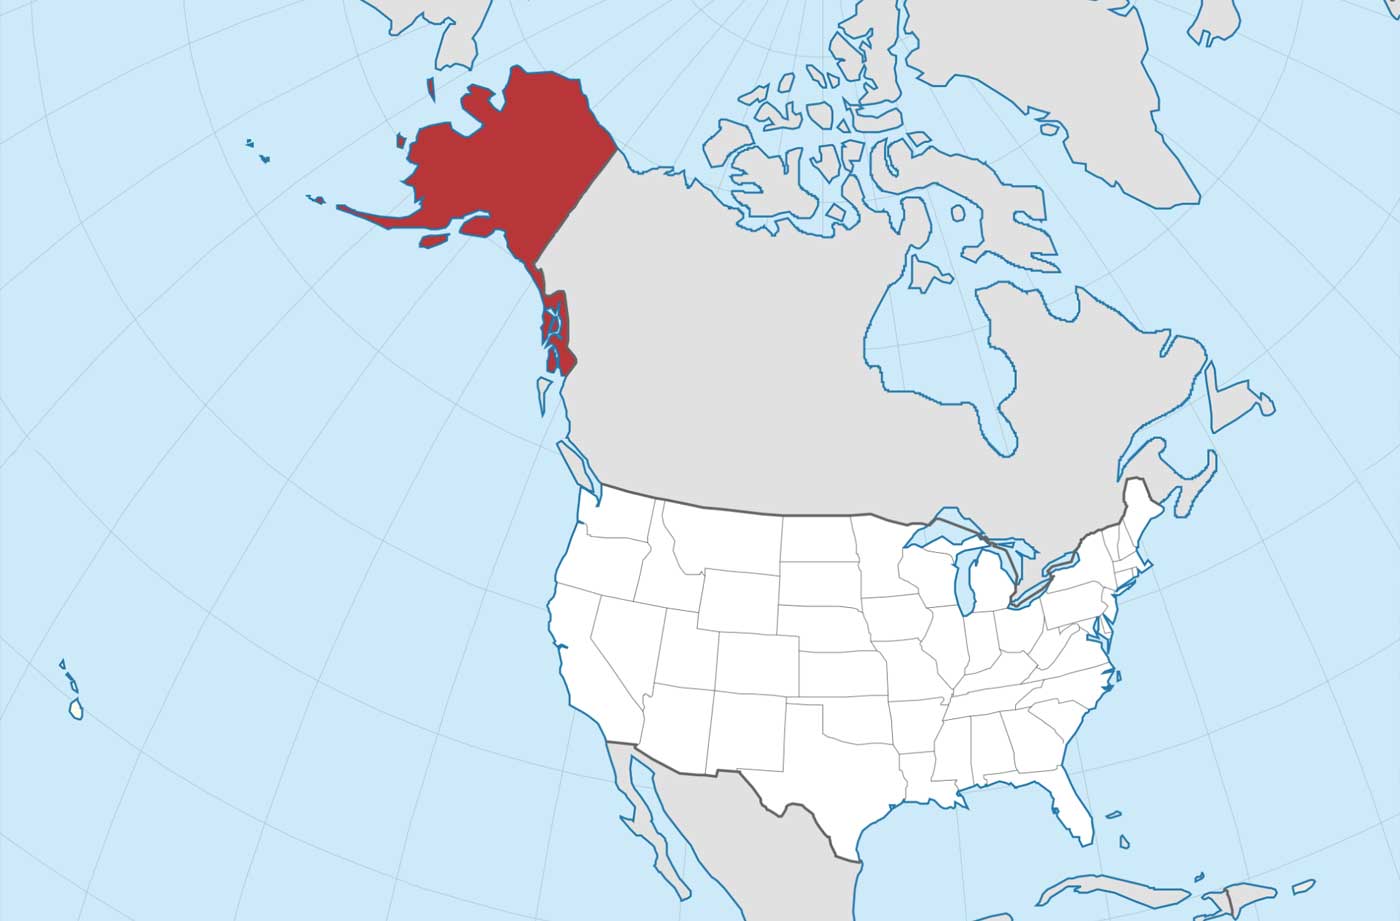 Location of Alaska State on US Map